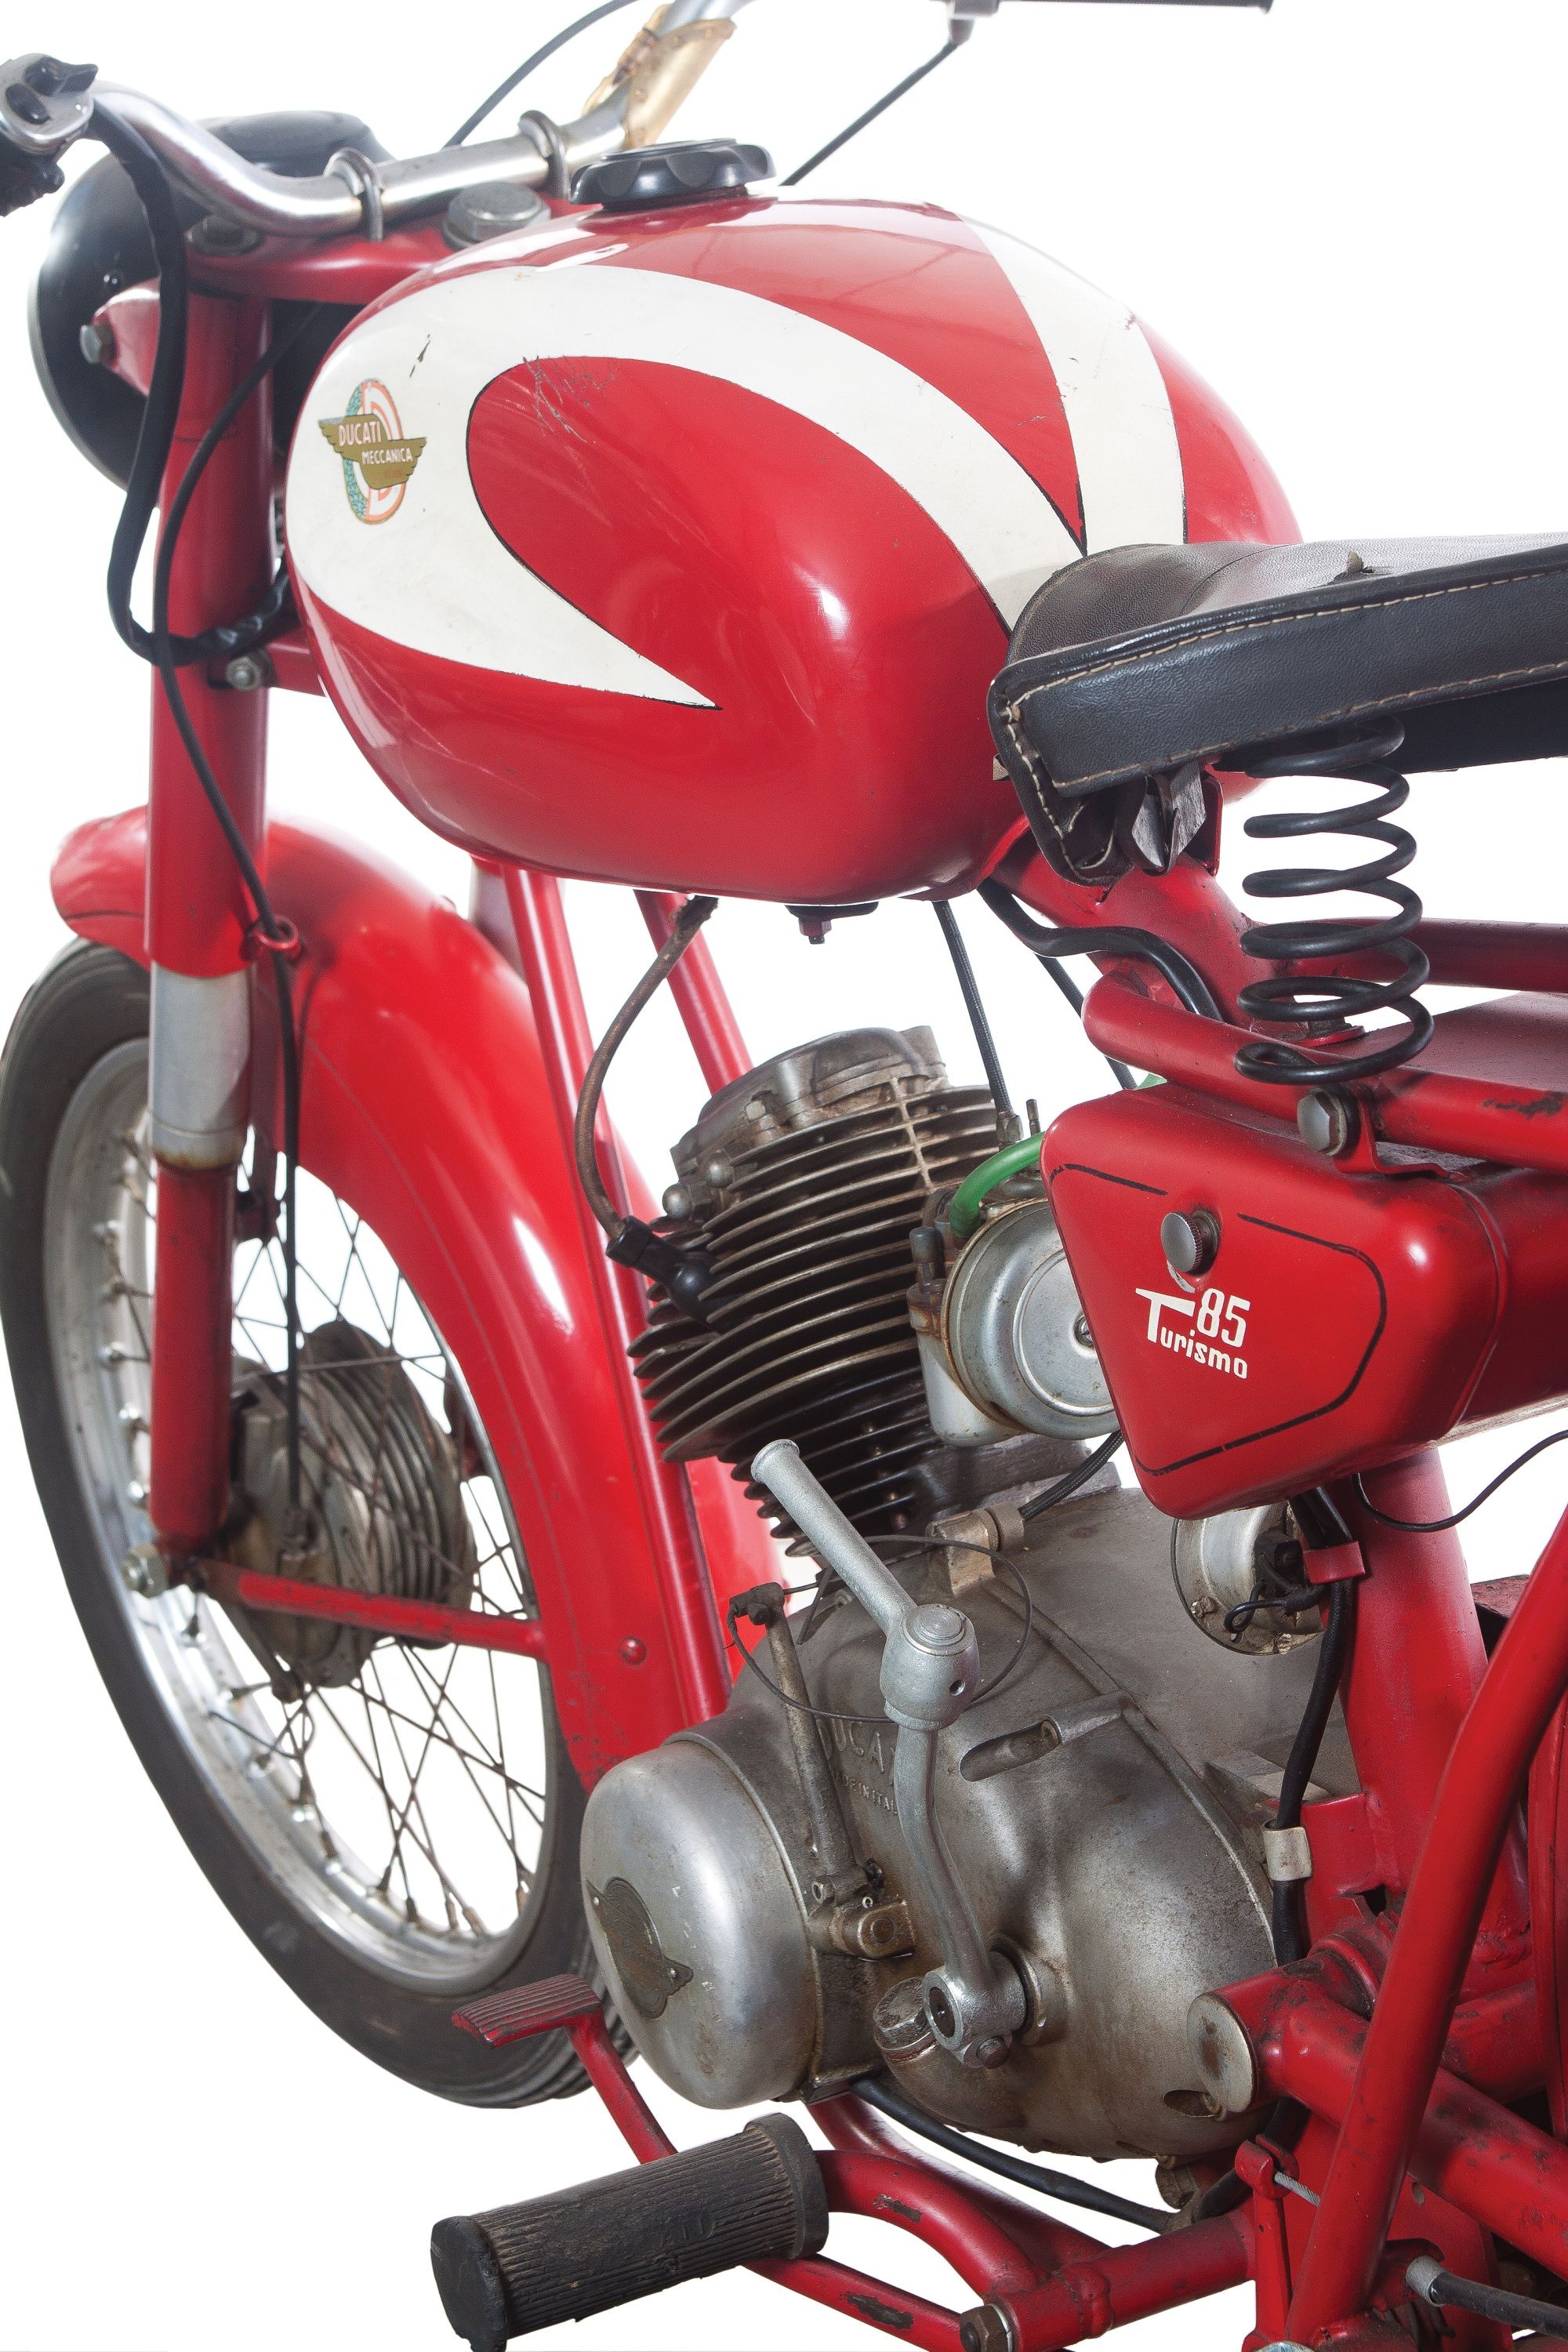 1959 Ducati 85 Turismo